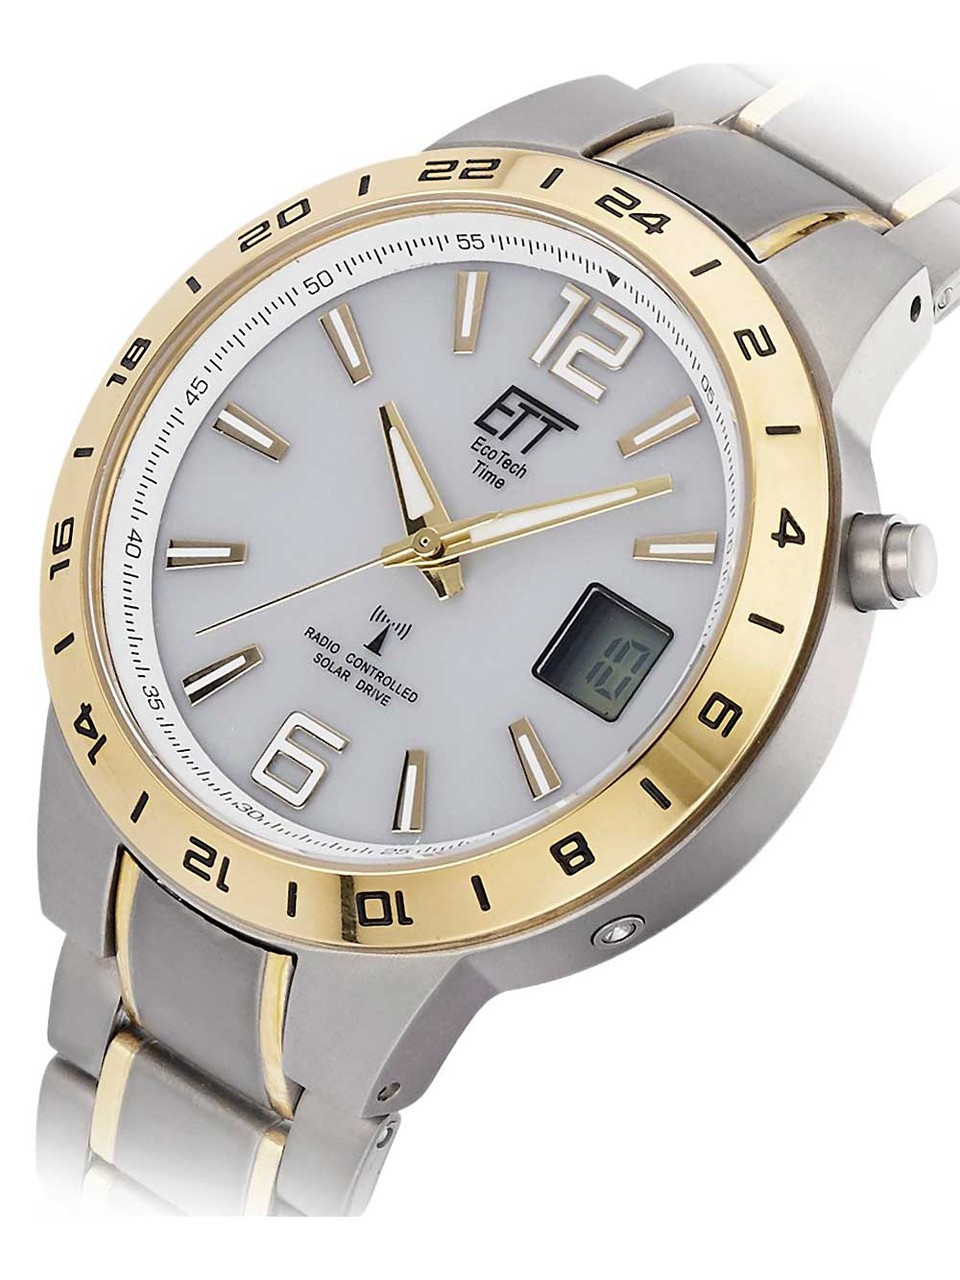 ETT EGT-11410-40M Men\'s solar titanium radio controlled watch 40mm 5ATM -  owlica | Genuine Watches